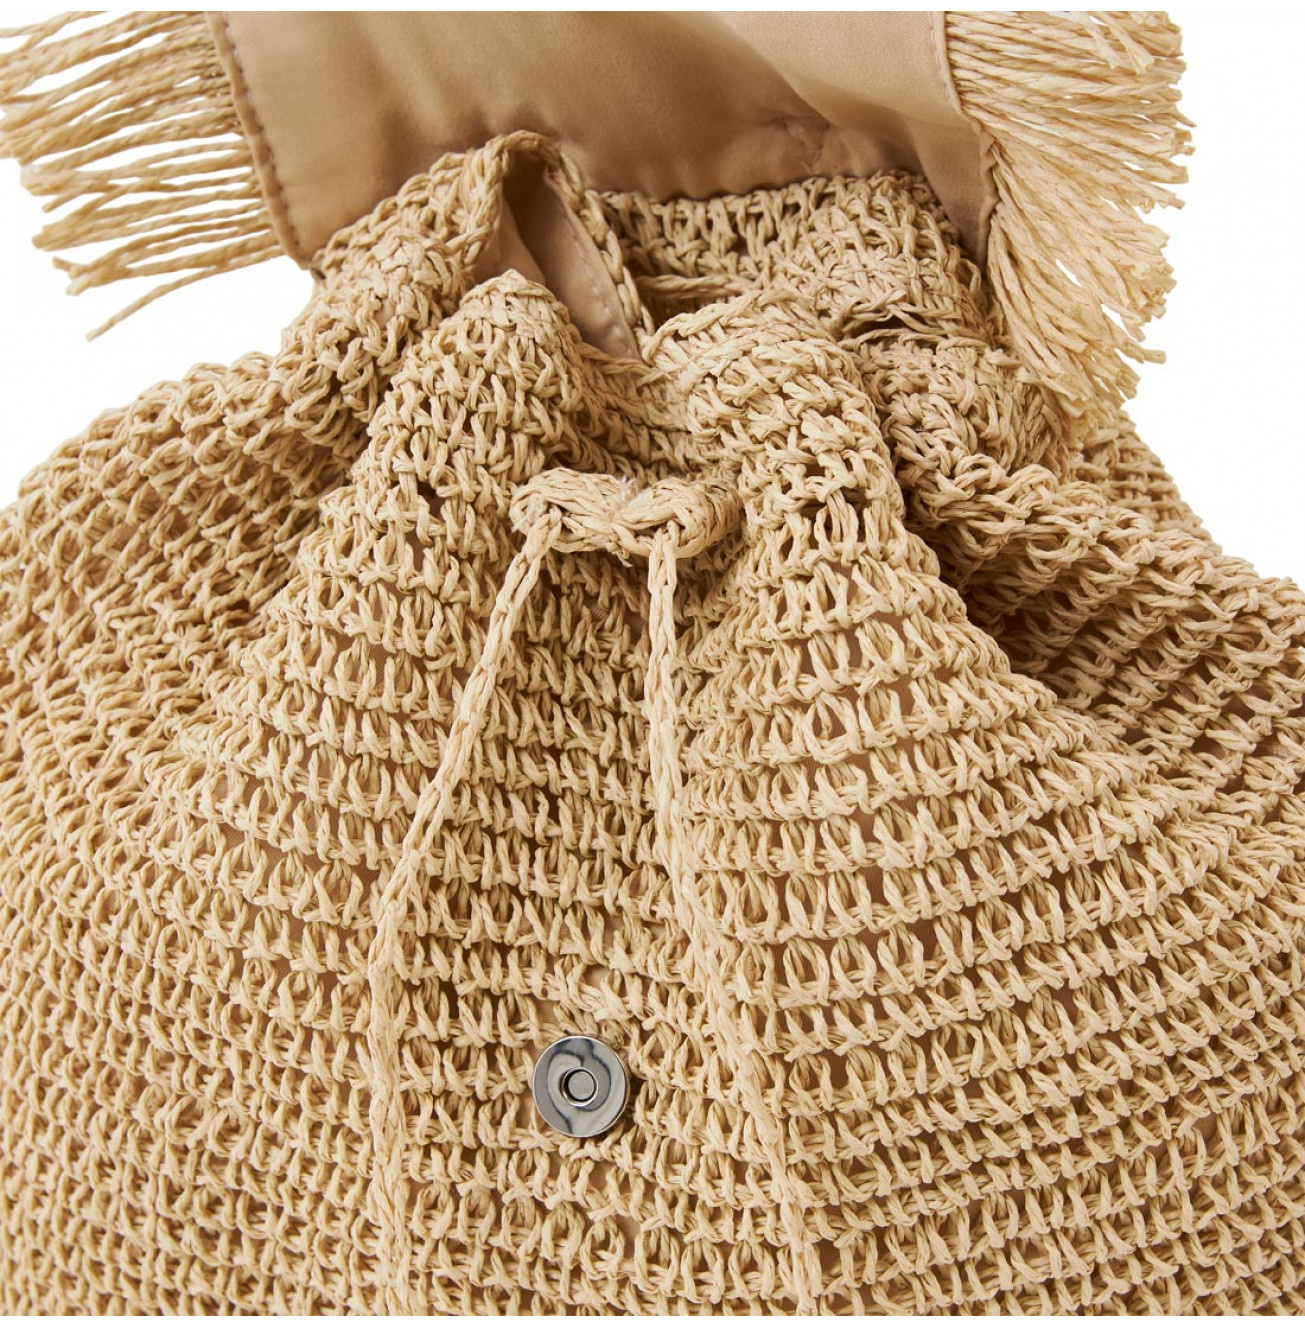 esthetisch Oprecht Eindig Riviera Maison Summer Festival Crochet Bag - Sterrenhoudt